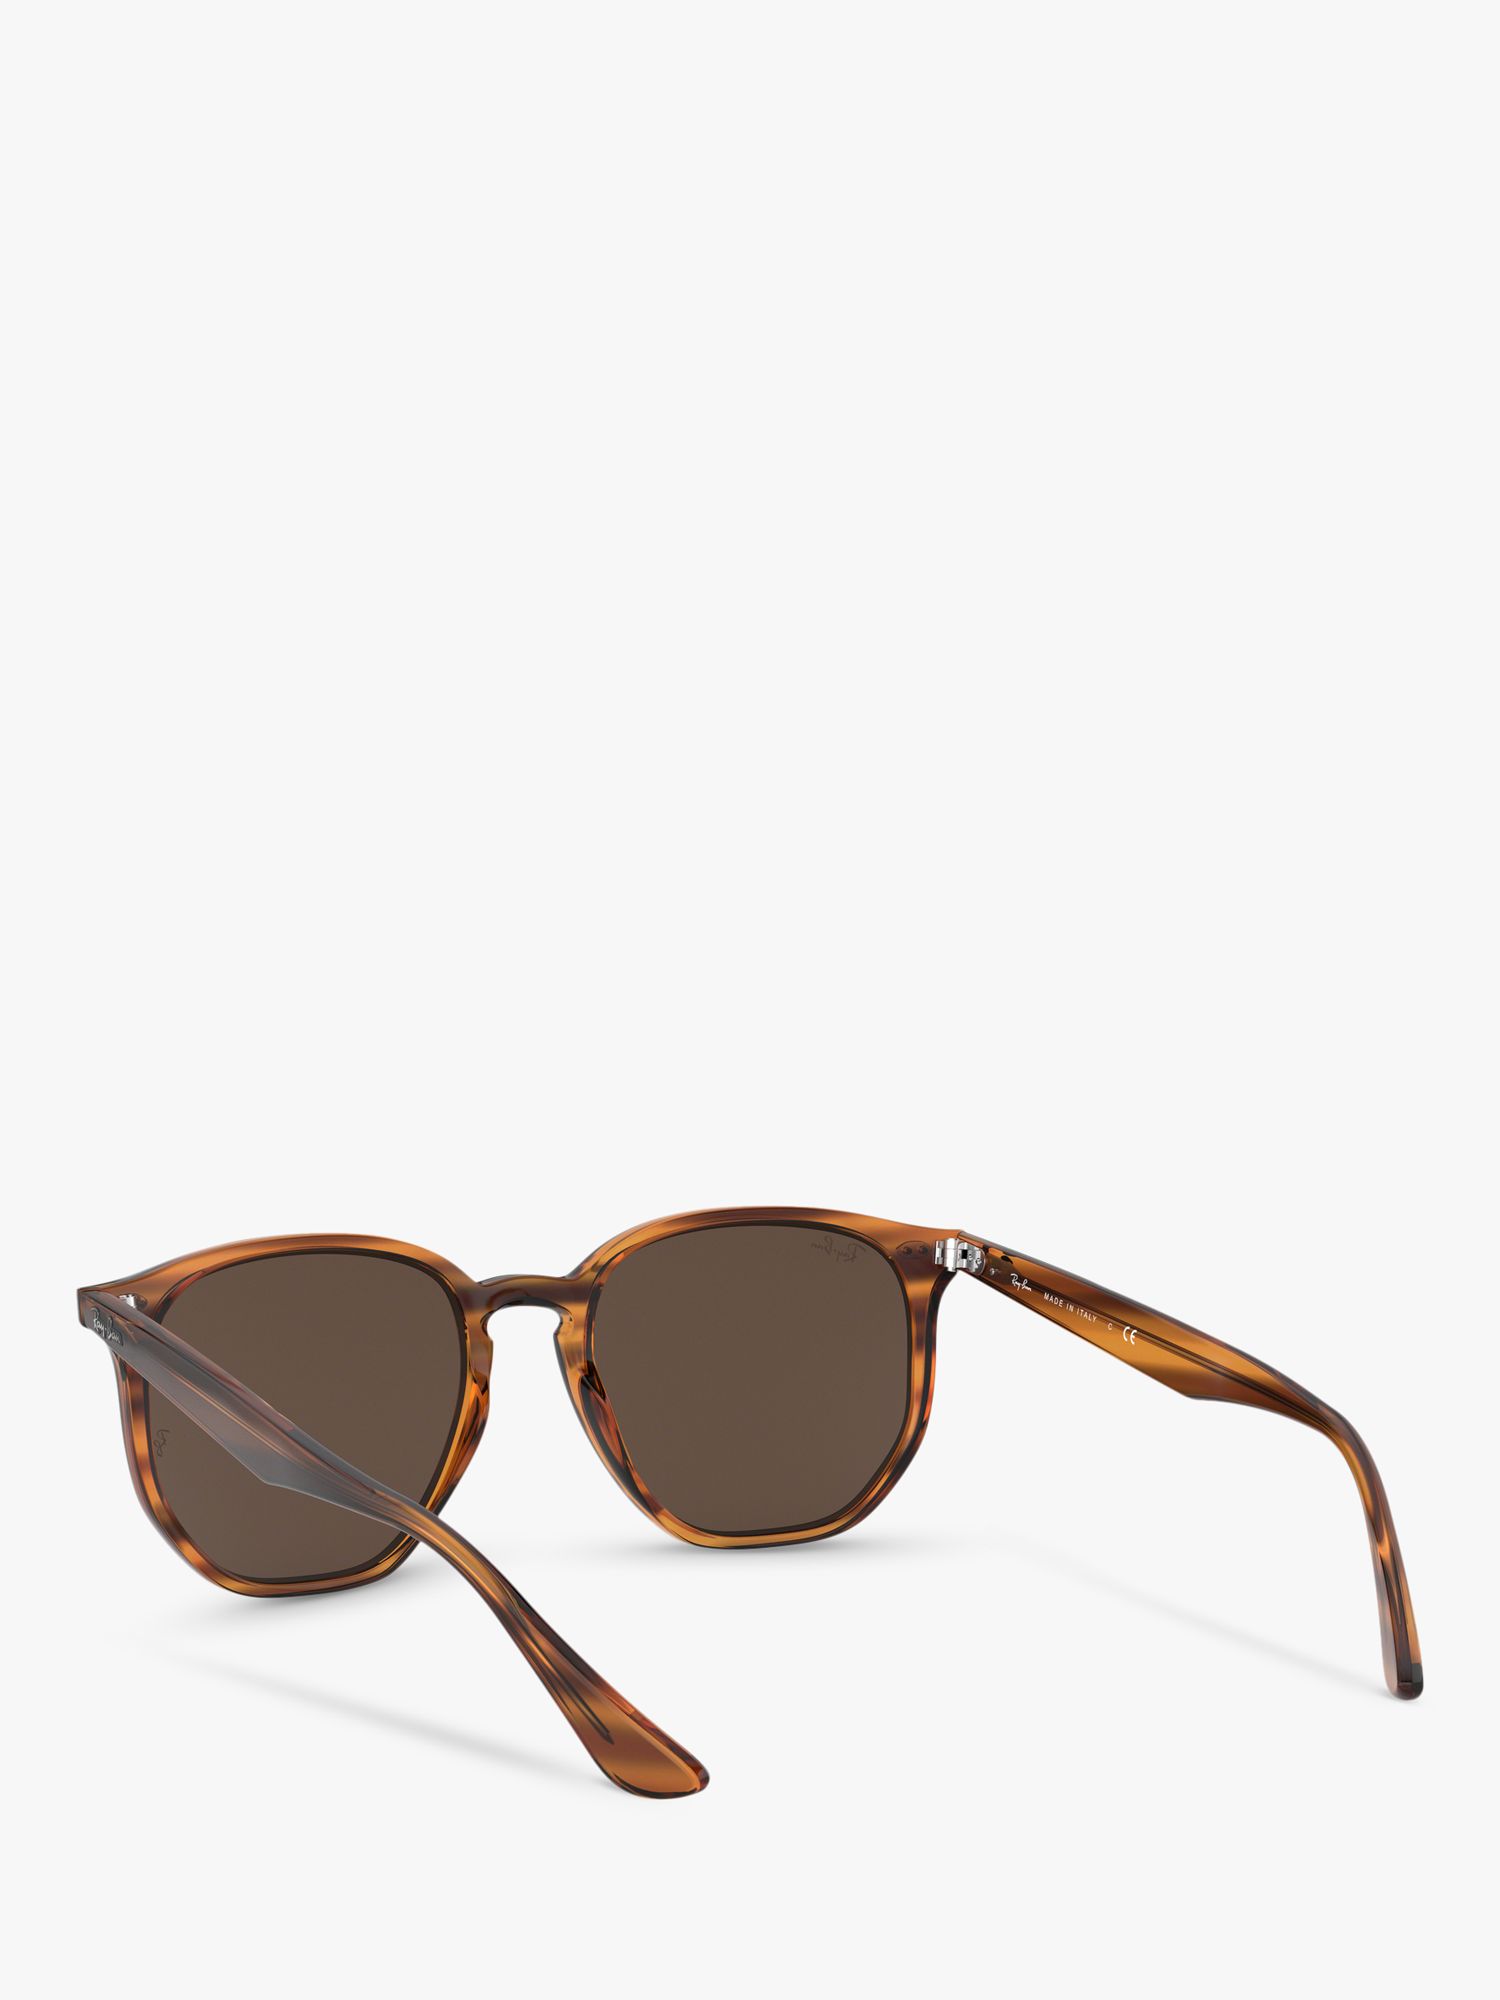 Ray-Ban RB4306 Unisex Oval Sunglasses, Havana/Brown